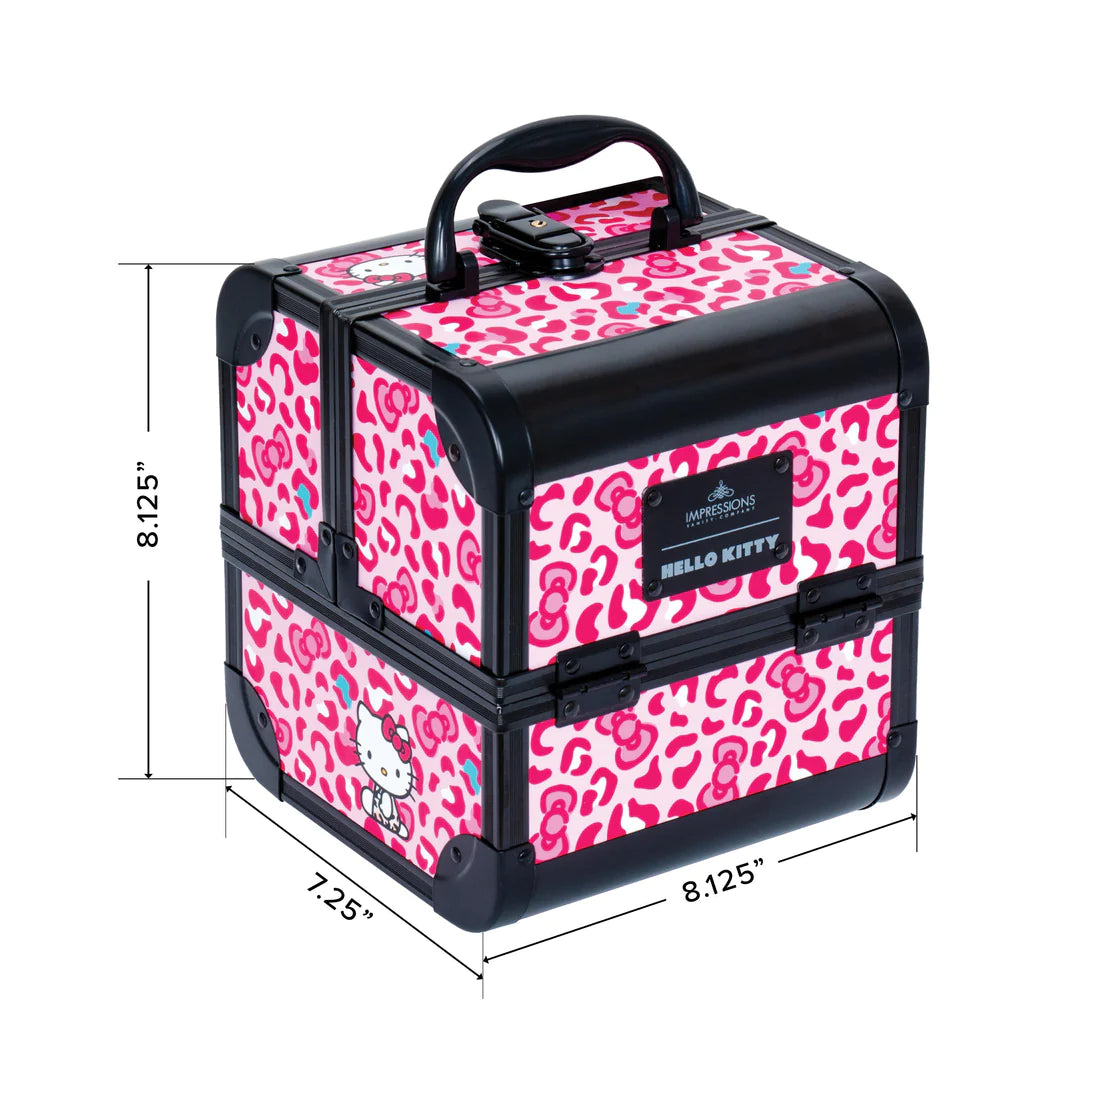 Impressions Vanity - Hello Kitty SlayCube Makeup Travel Case Pink Animal